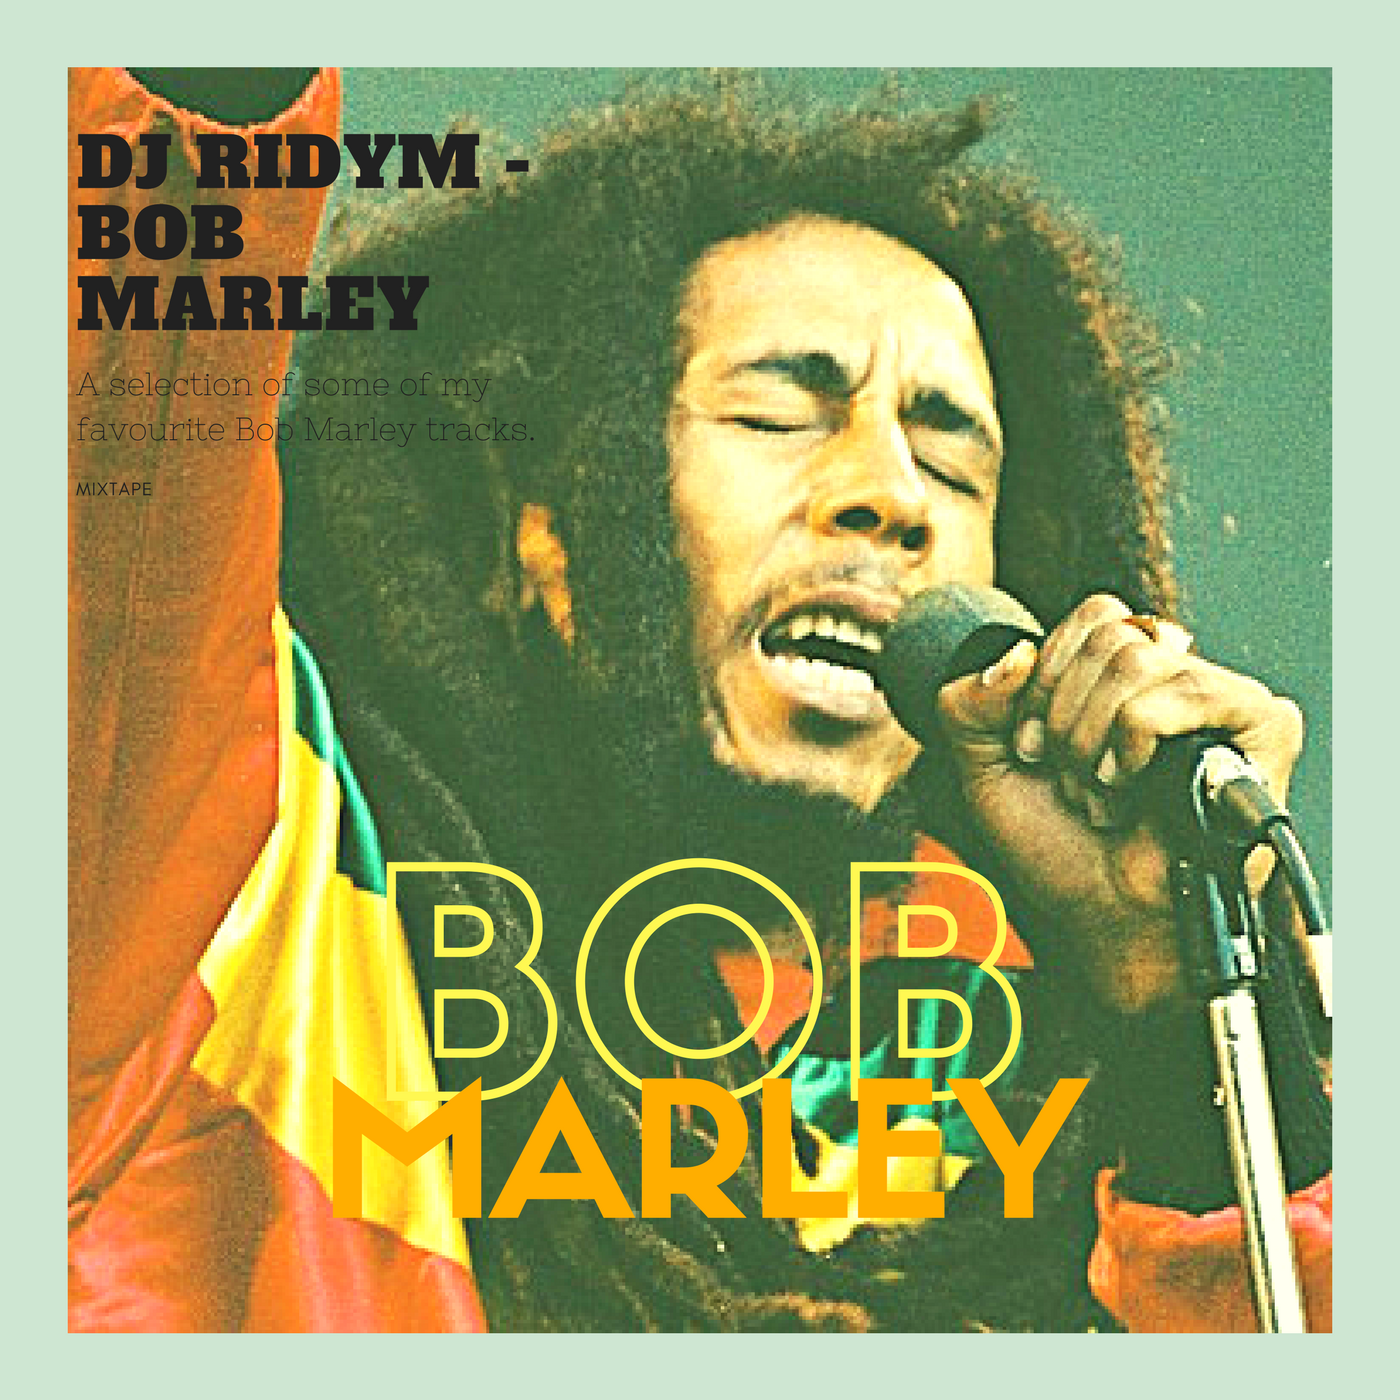 DJ Ridym - Bob Marley Mixtape 